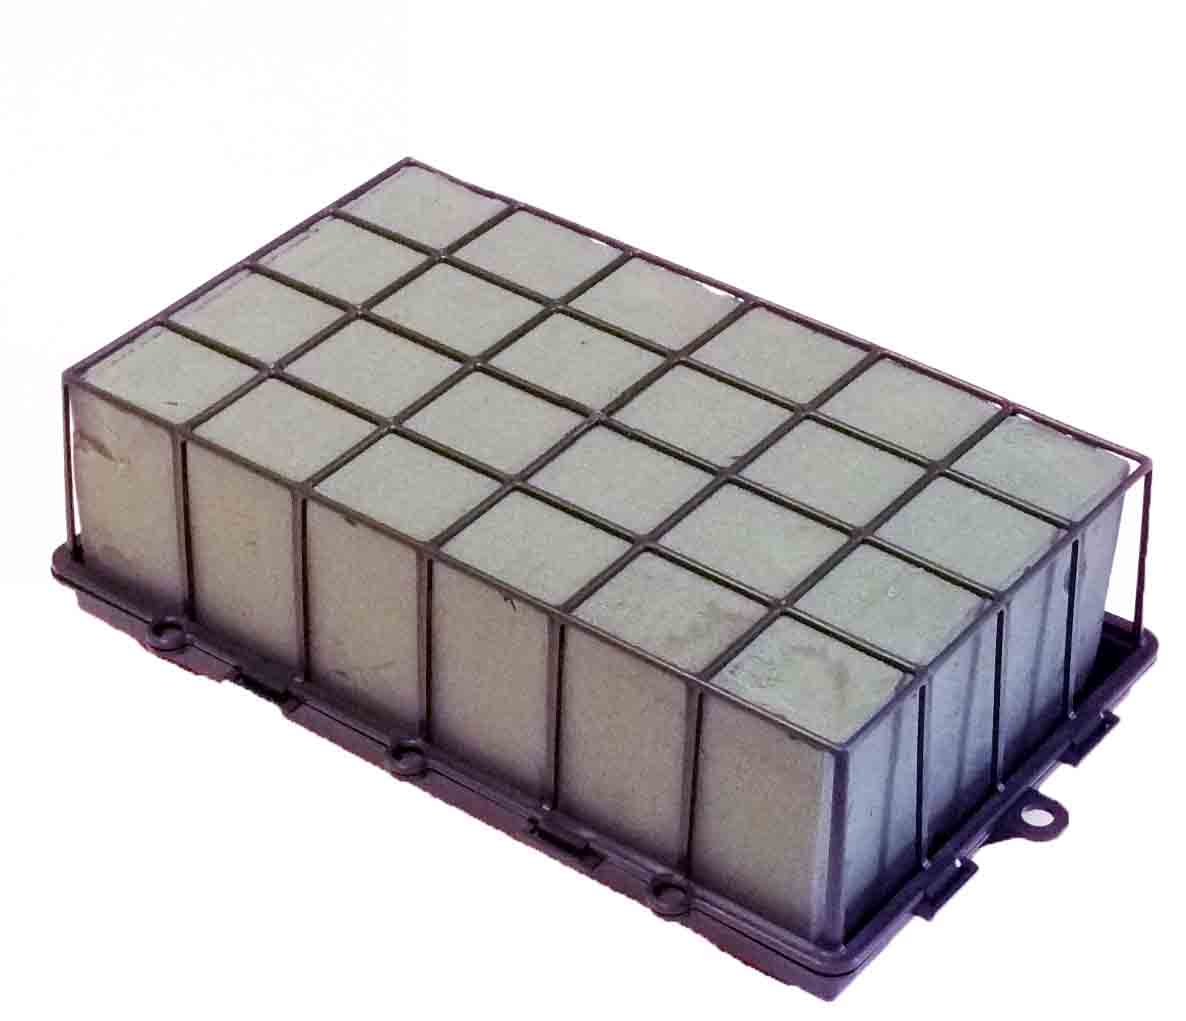 61706 - 11 x 7 x 3.25" Foam Cage - 12.50 ea, 11.85/6